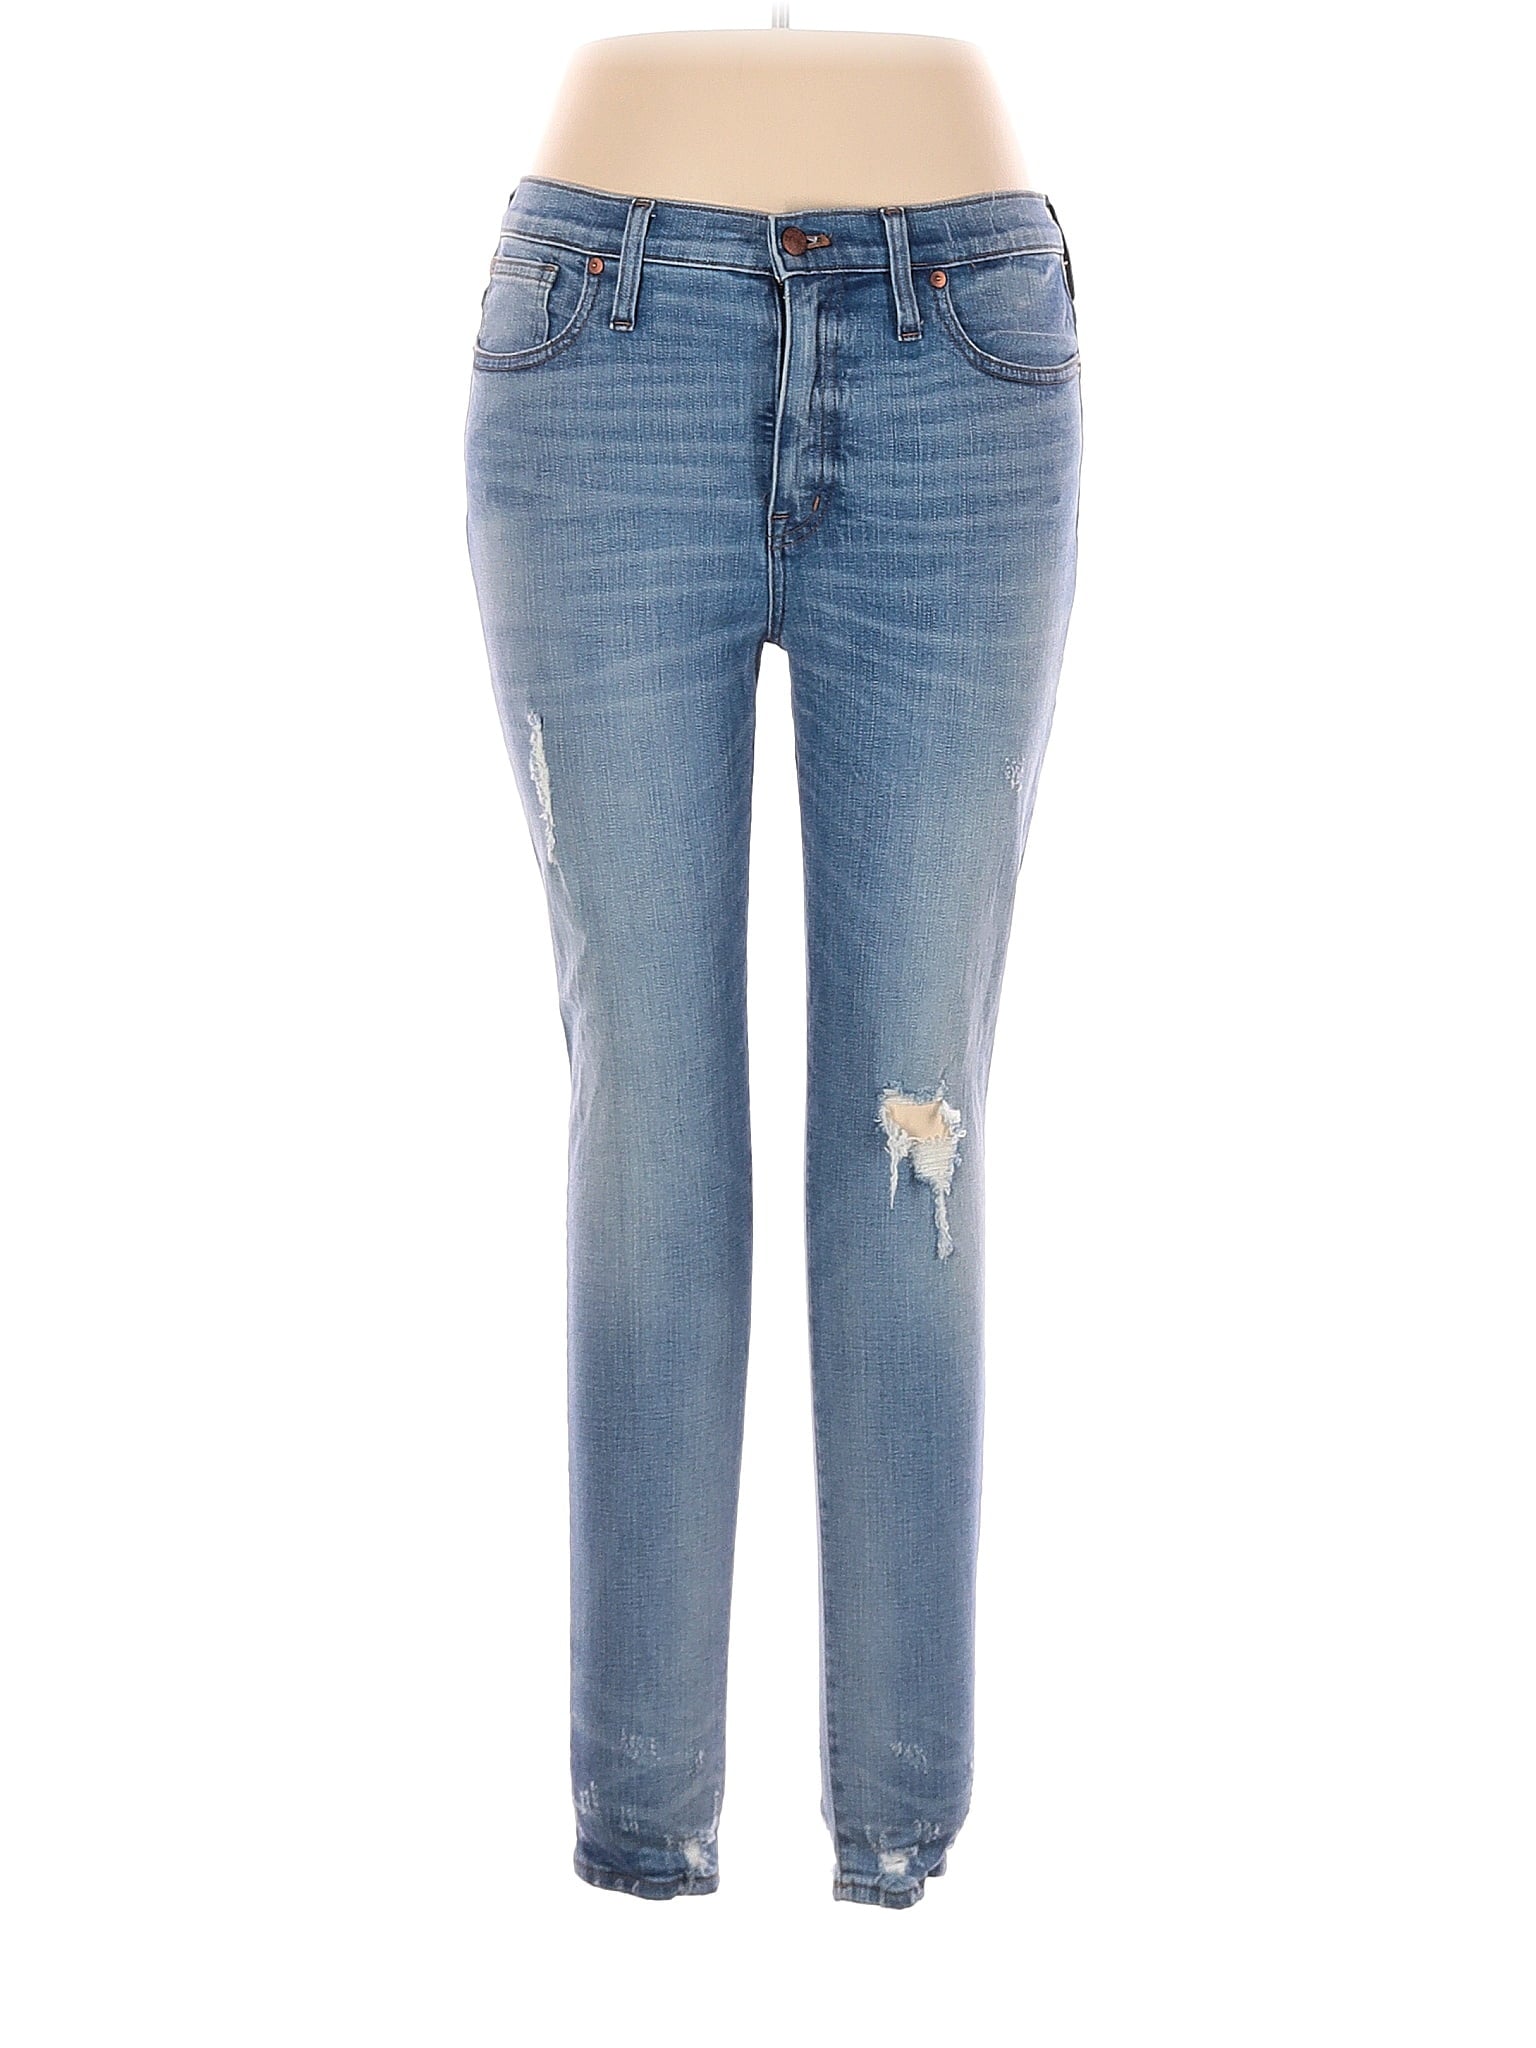 High-Rise Jeans waist size - 31